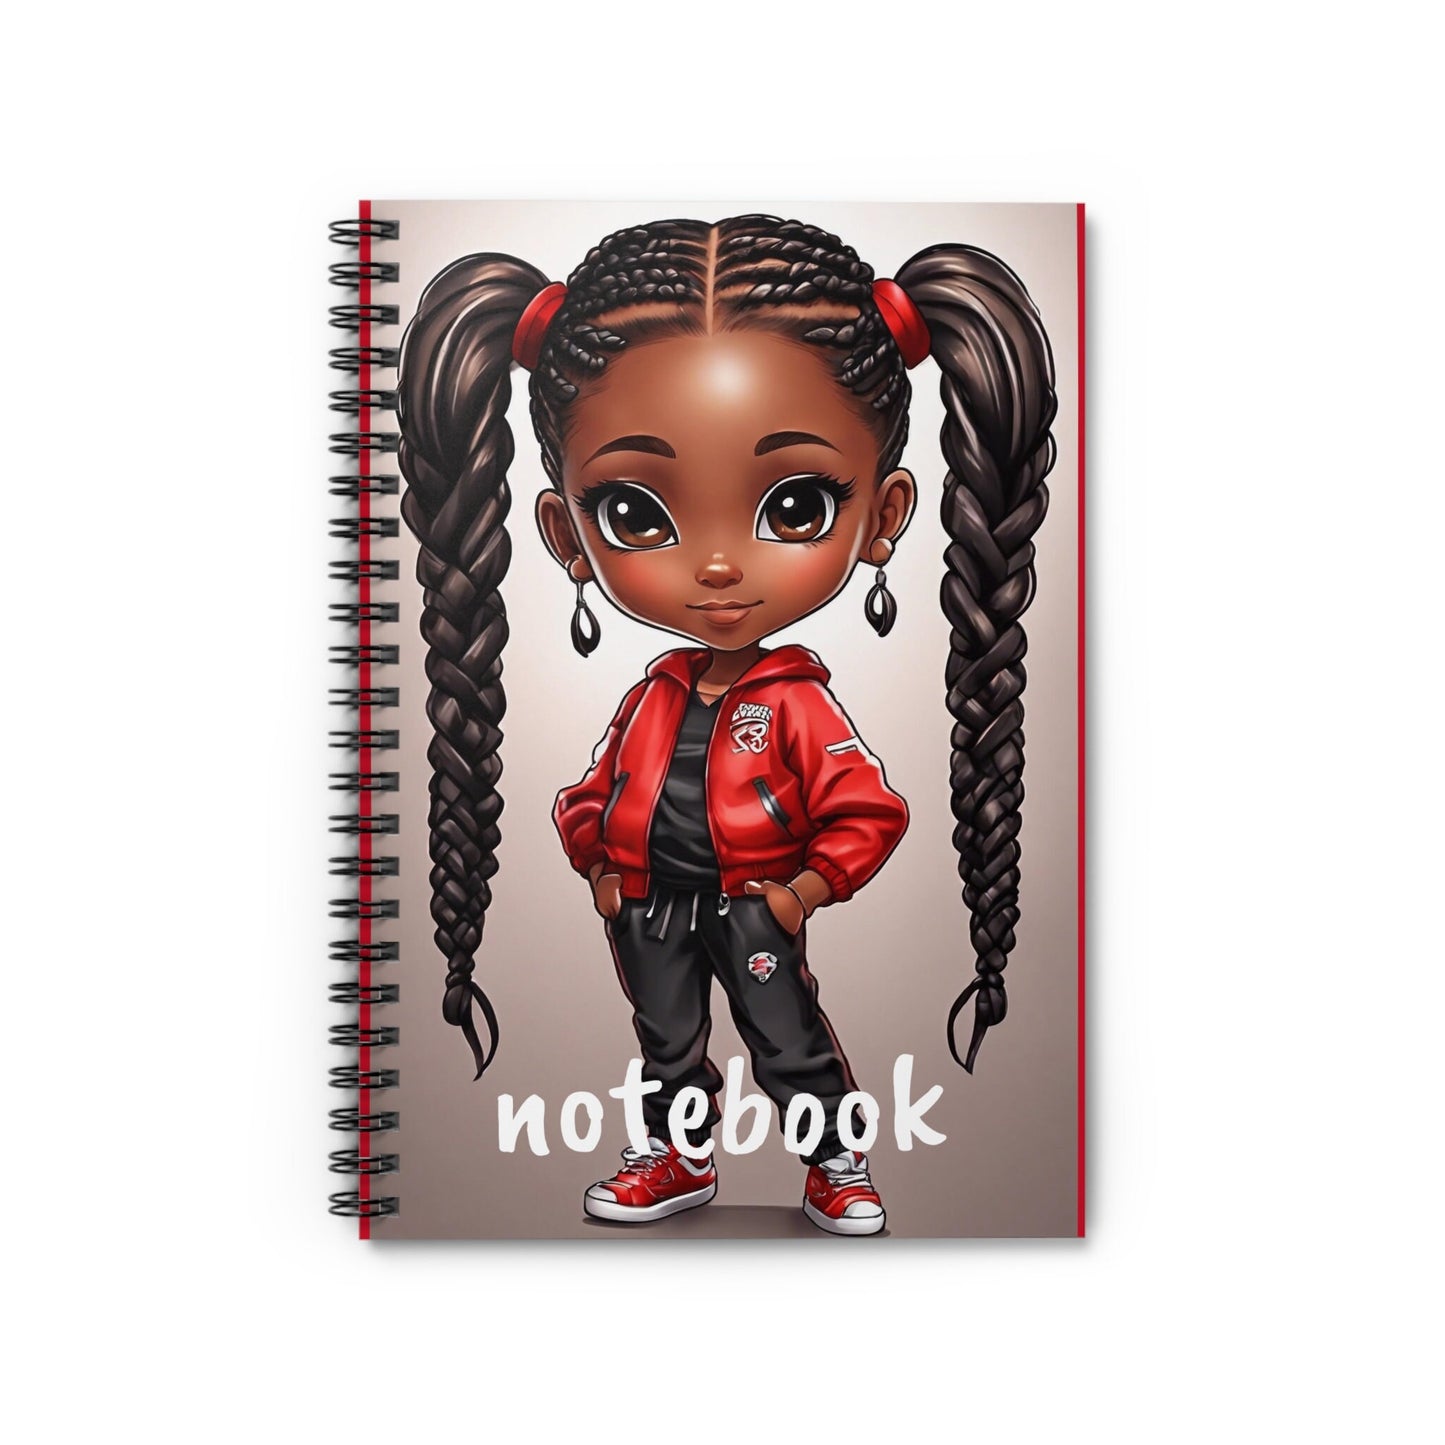 Notebook: 2 Braid Tweenage African American| Blasian Inspired | Red Oriental Expressions Journal/ Spiral Notebook - Ruled Line